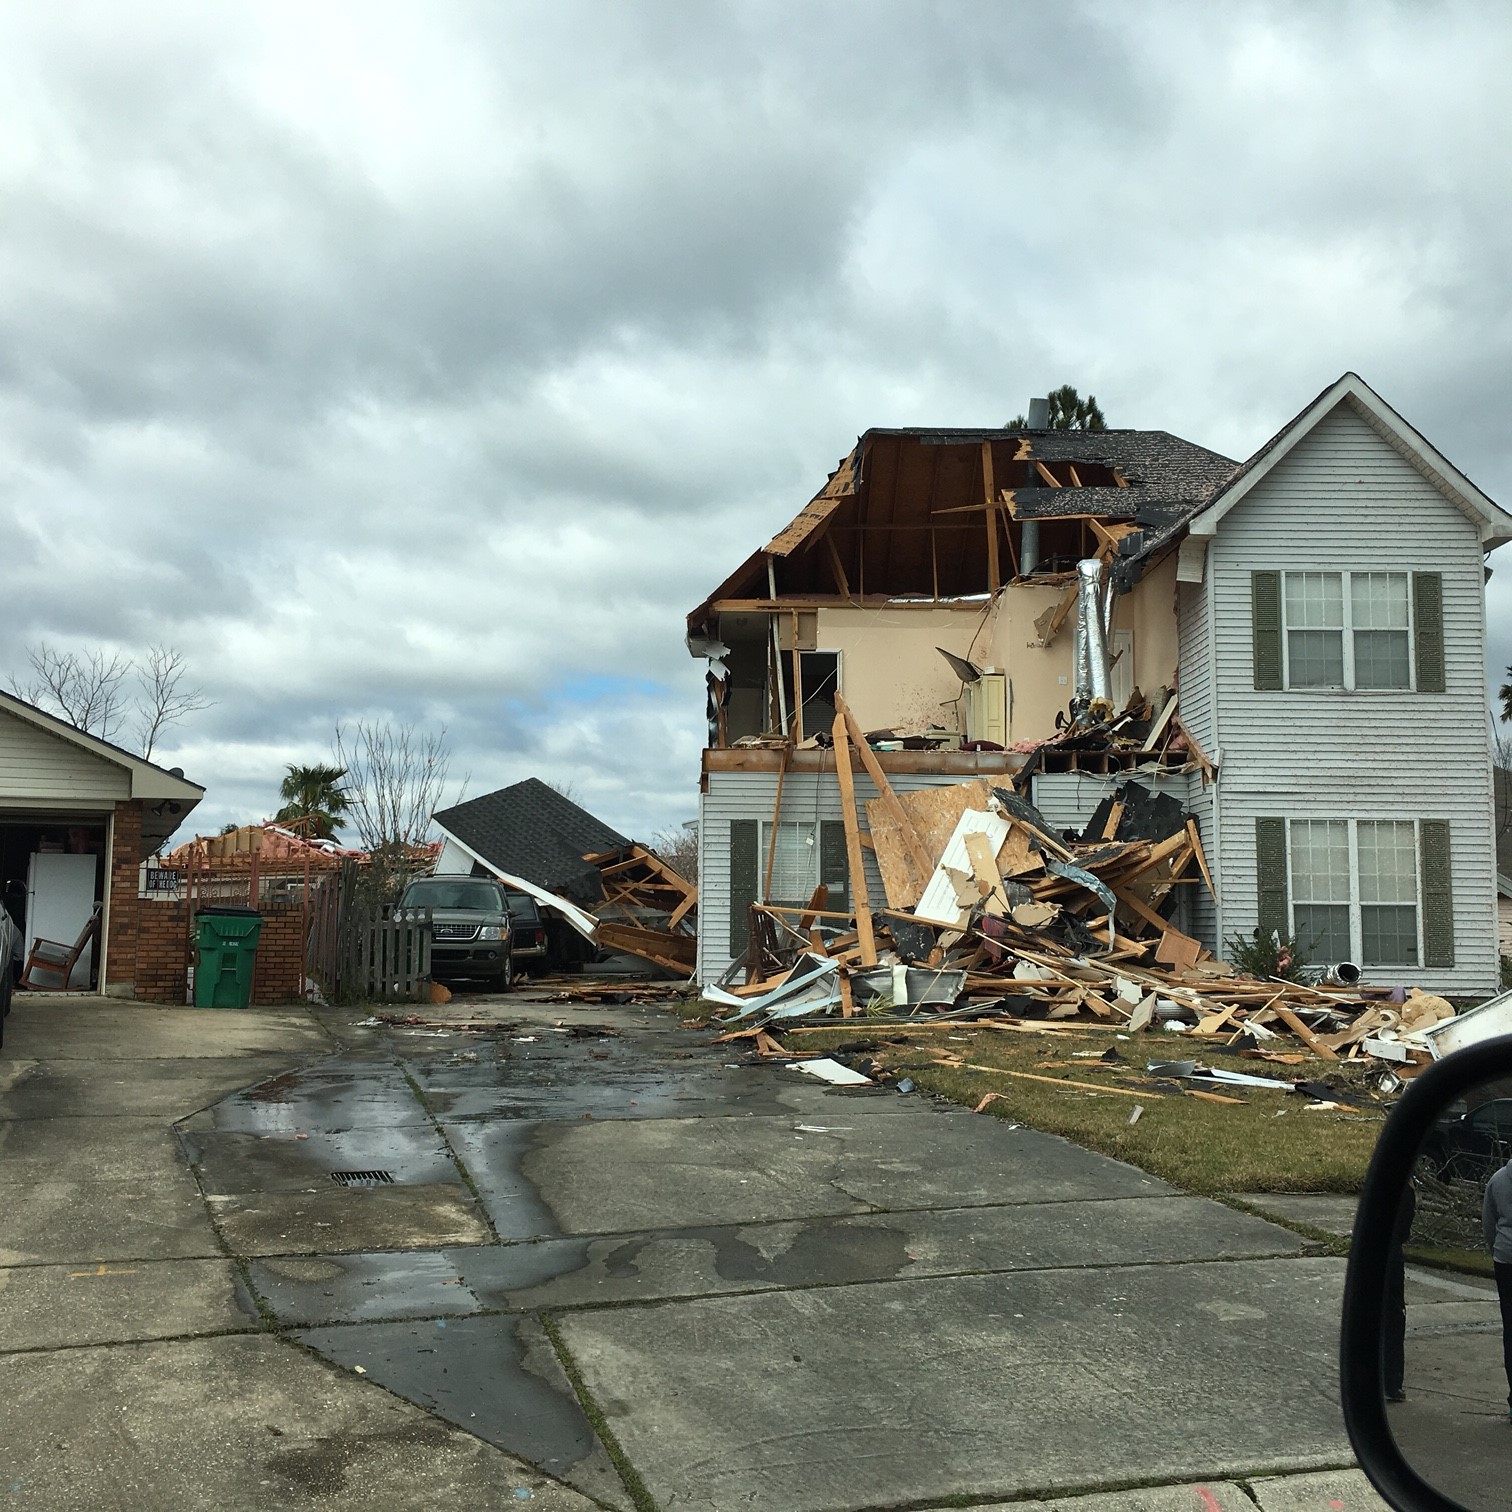 Louisiana DR Teams help communities begin cleaning up after tornado outbreak - Baptist Message